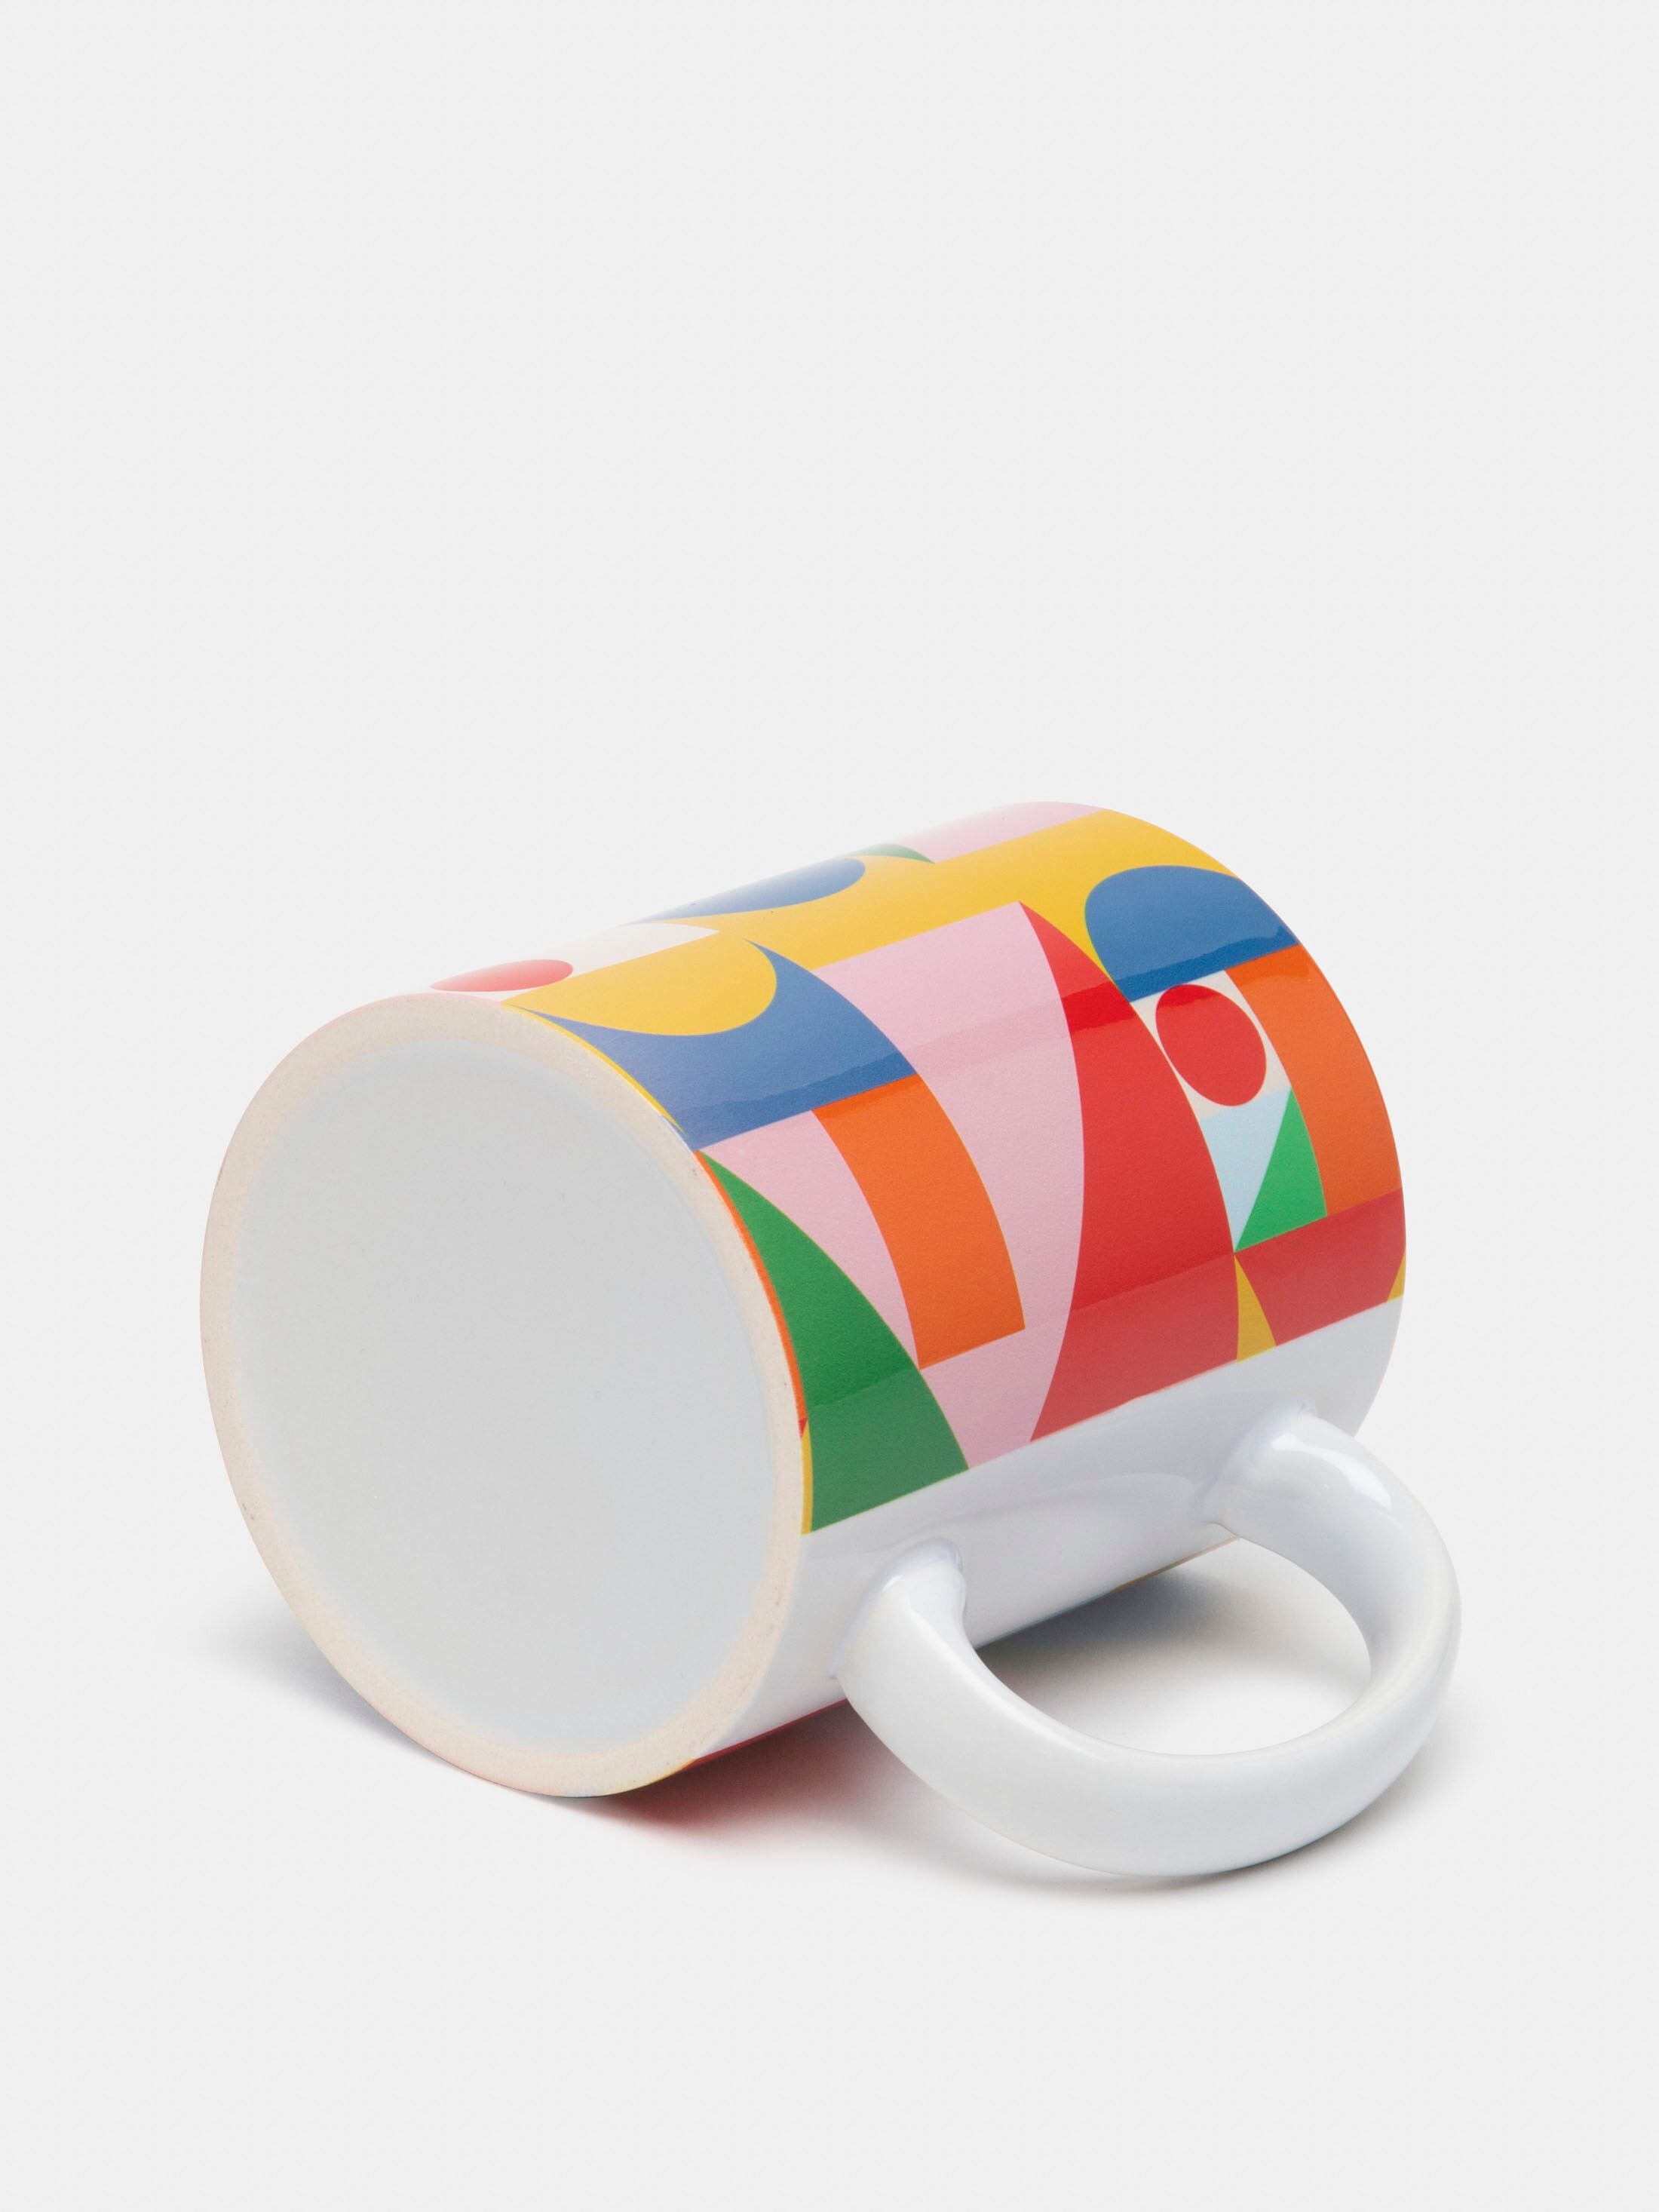 make your own mug using artwork